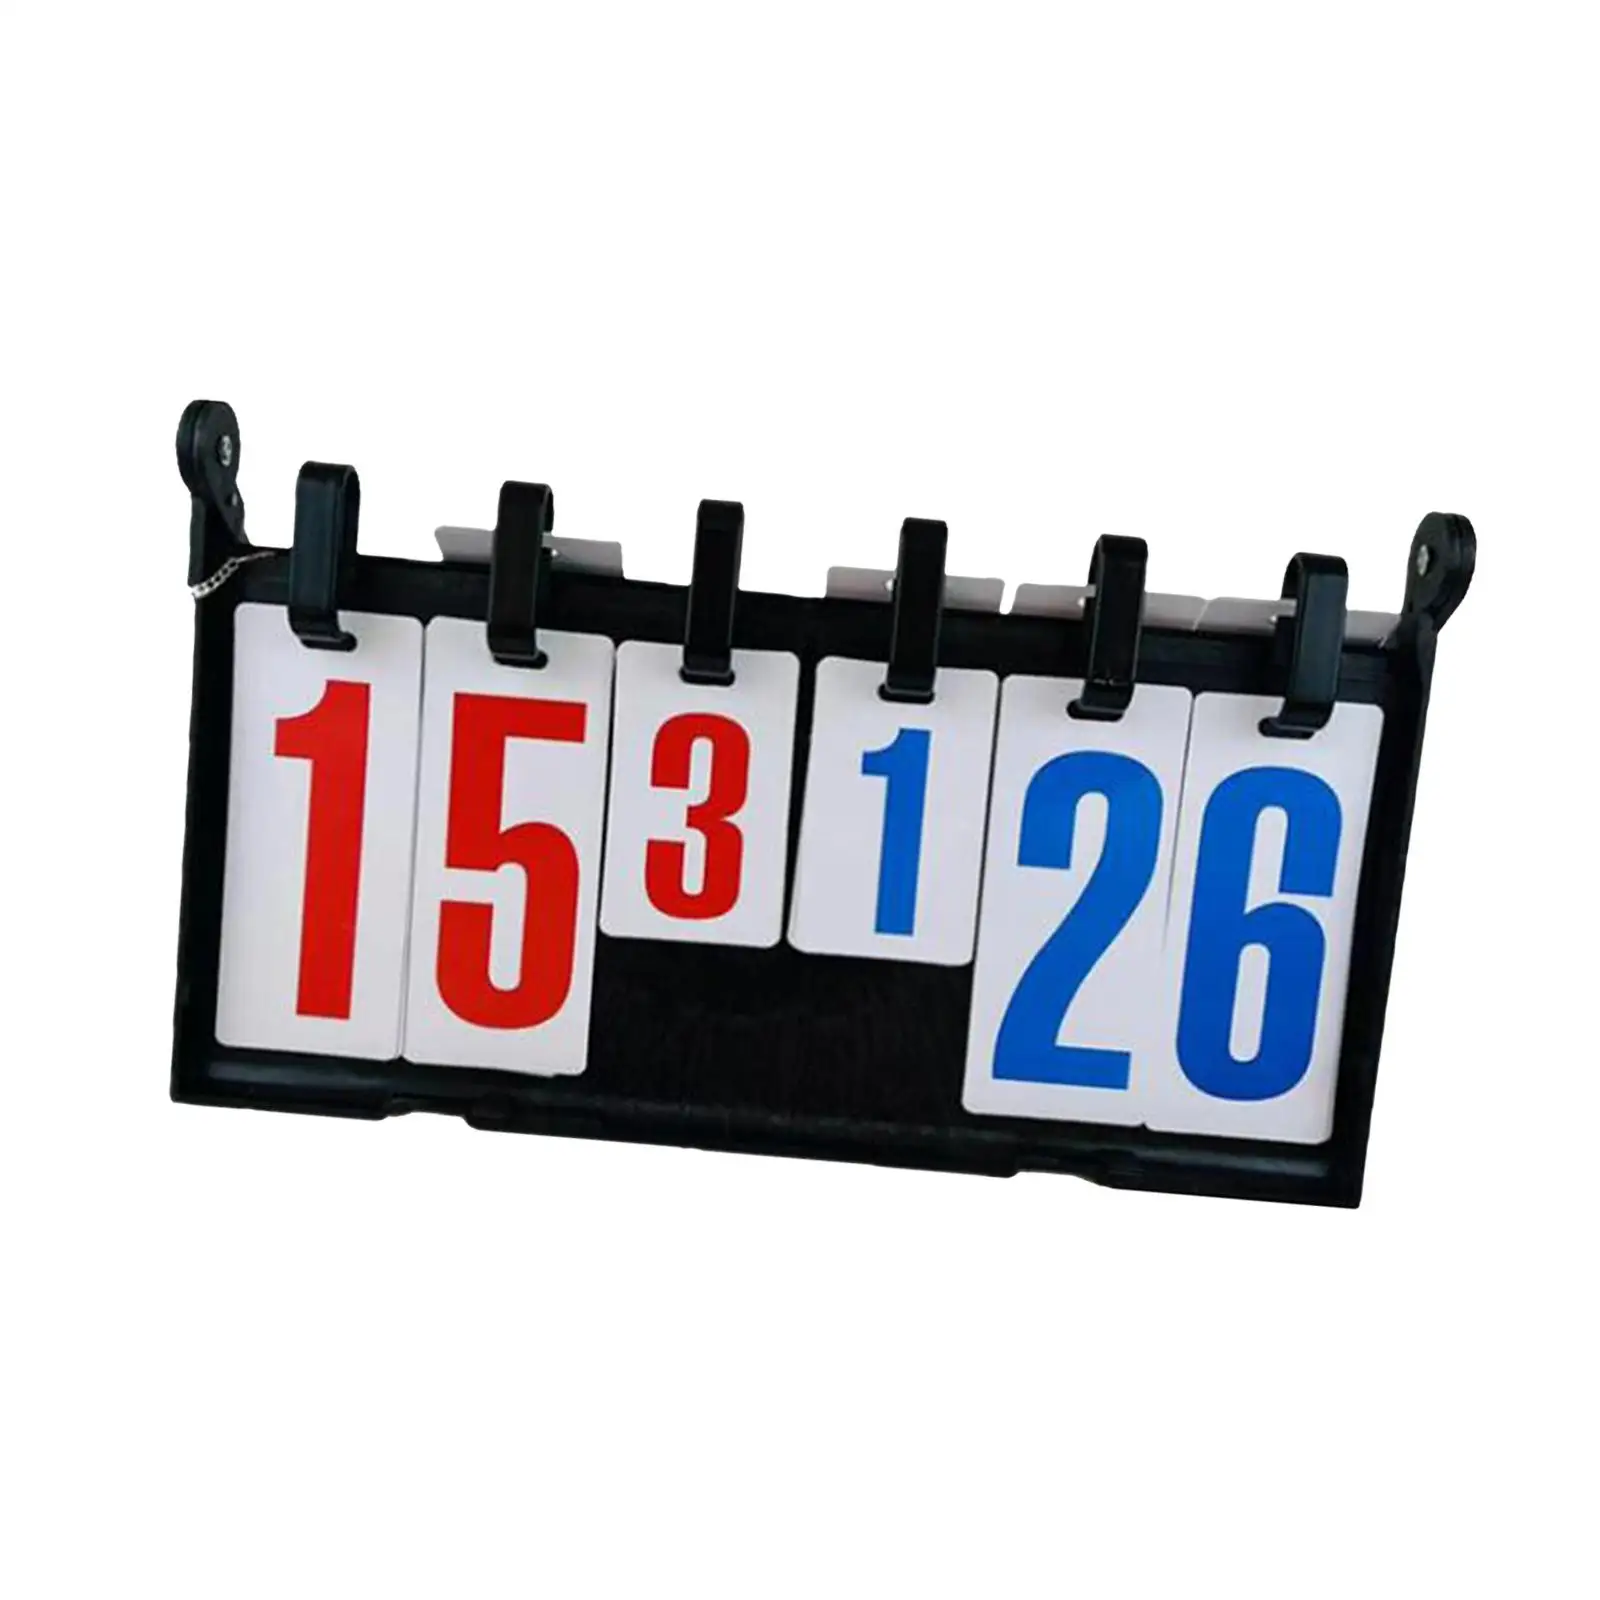 Sport Scoreboard Score Flip Tabletop or Hanging Compact 39cmx23cm 6 Digit Score